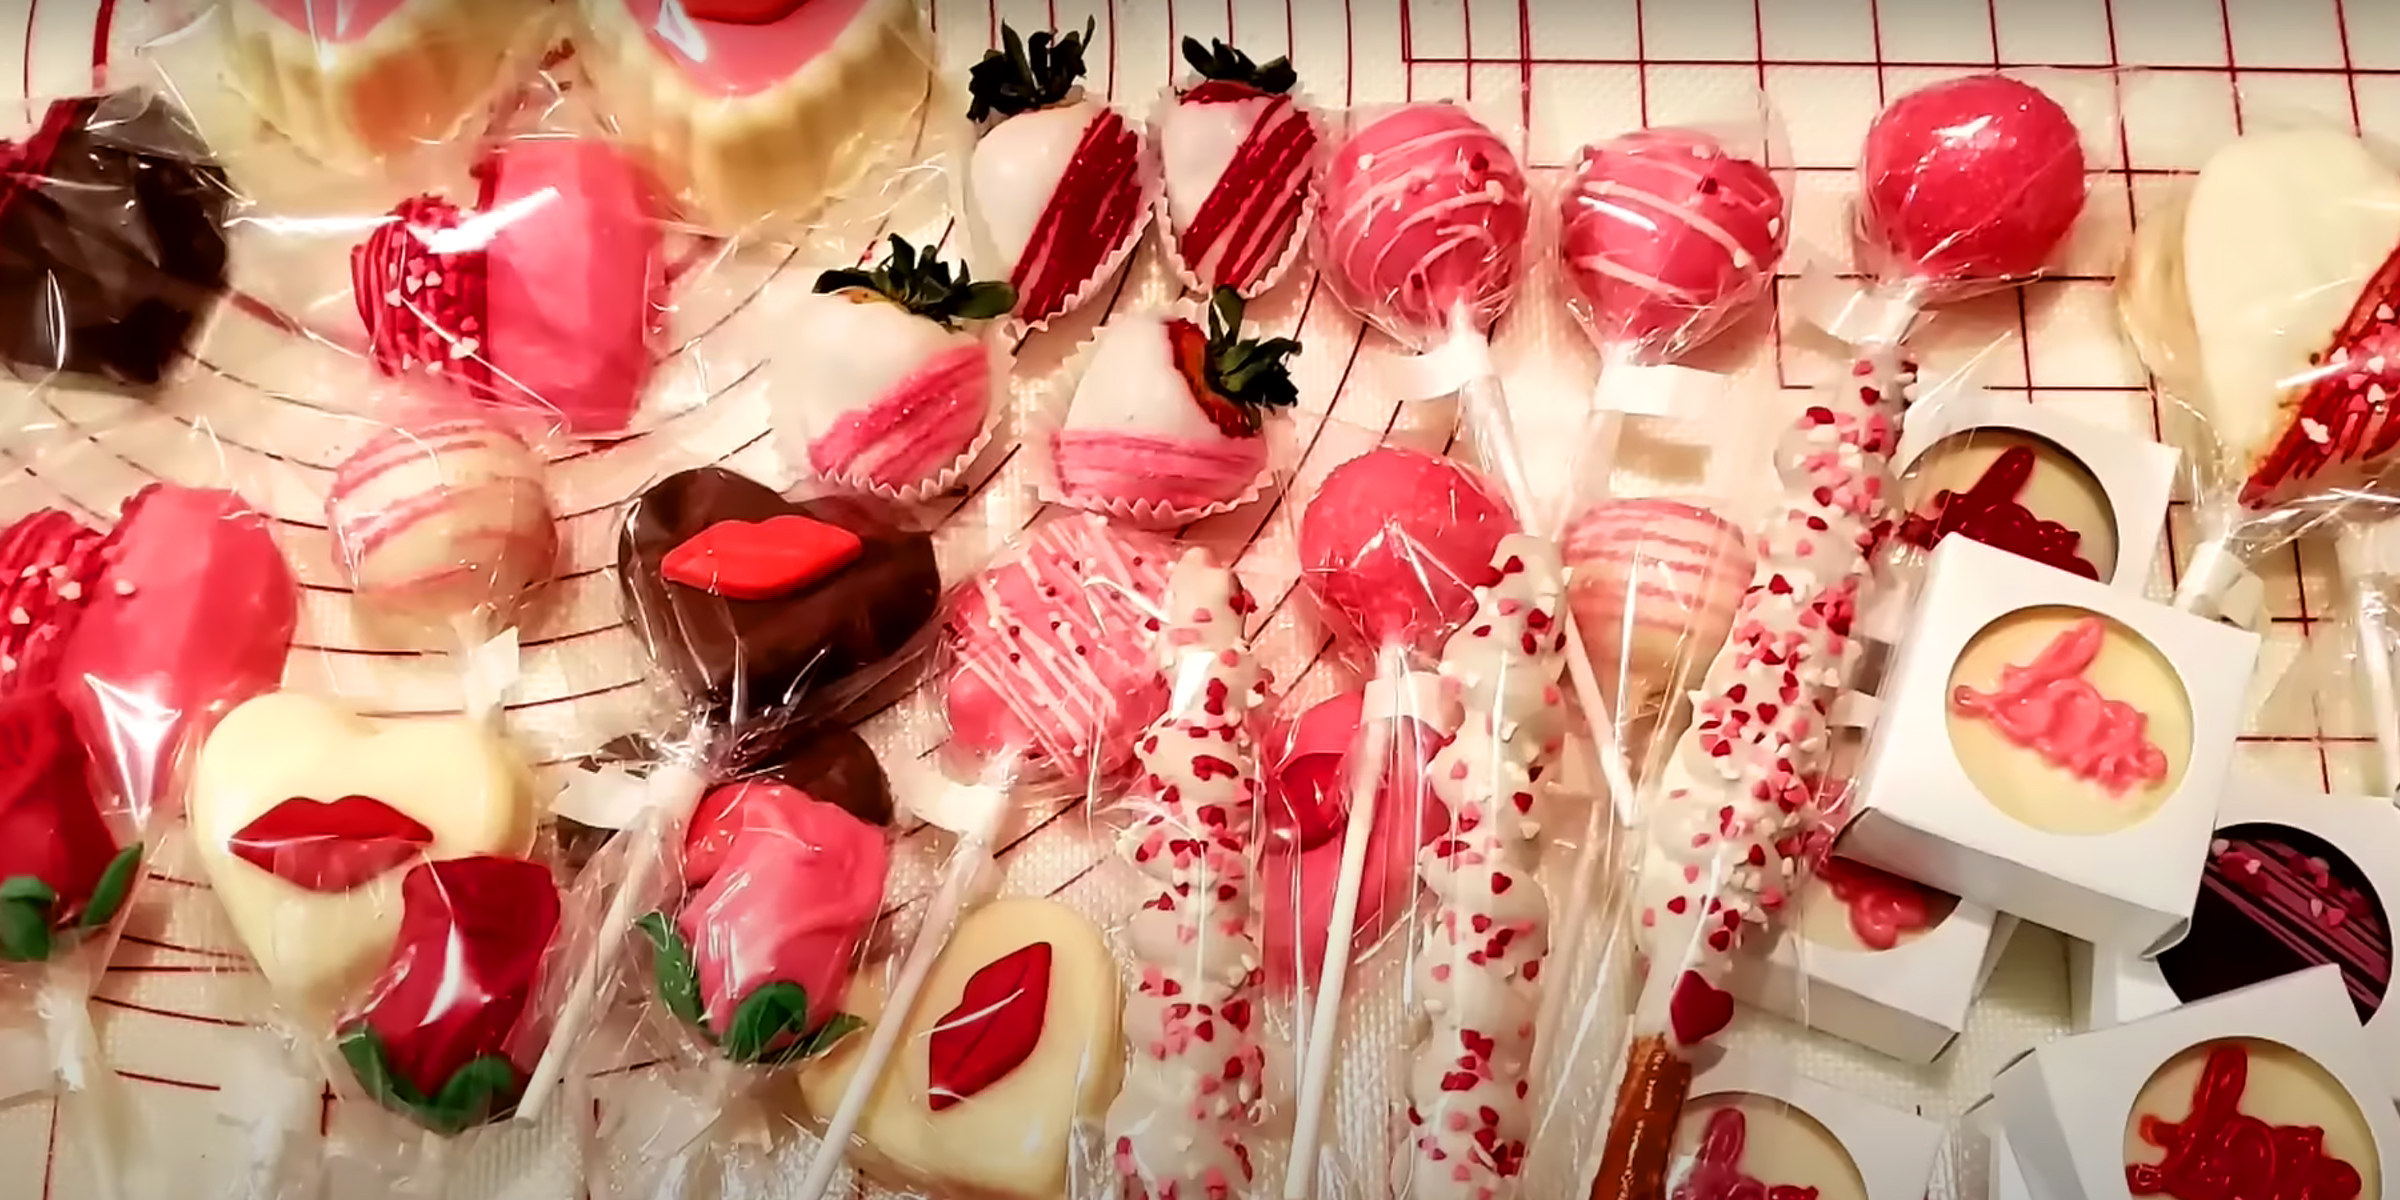 DIY classroom valentine snacks | Source: YouTube/@ChellsSugarRush